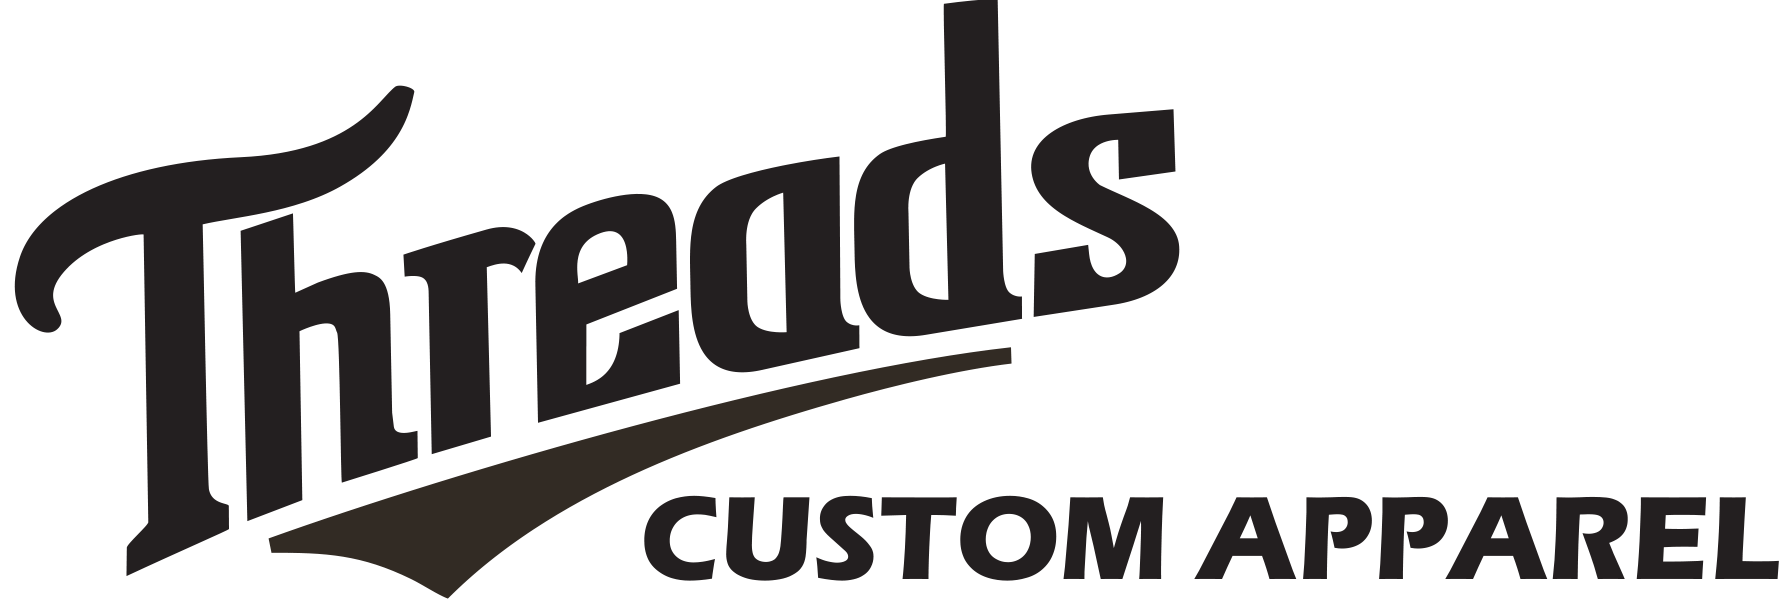 Custom Apparel Logo - Threads Custom Apparel. Chatfield, MN